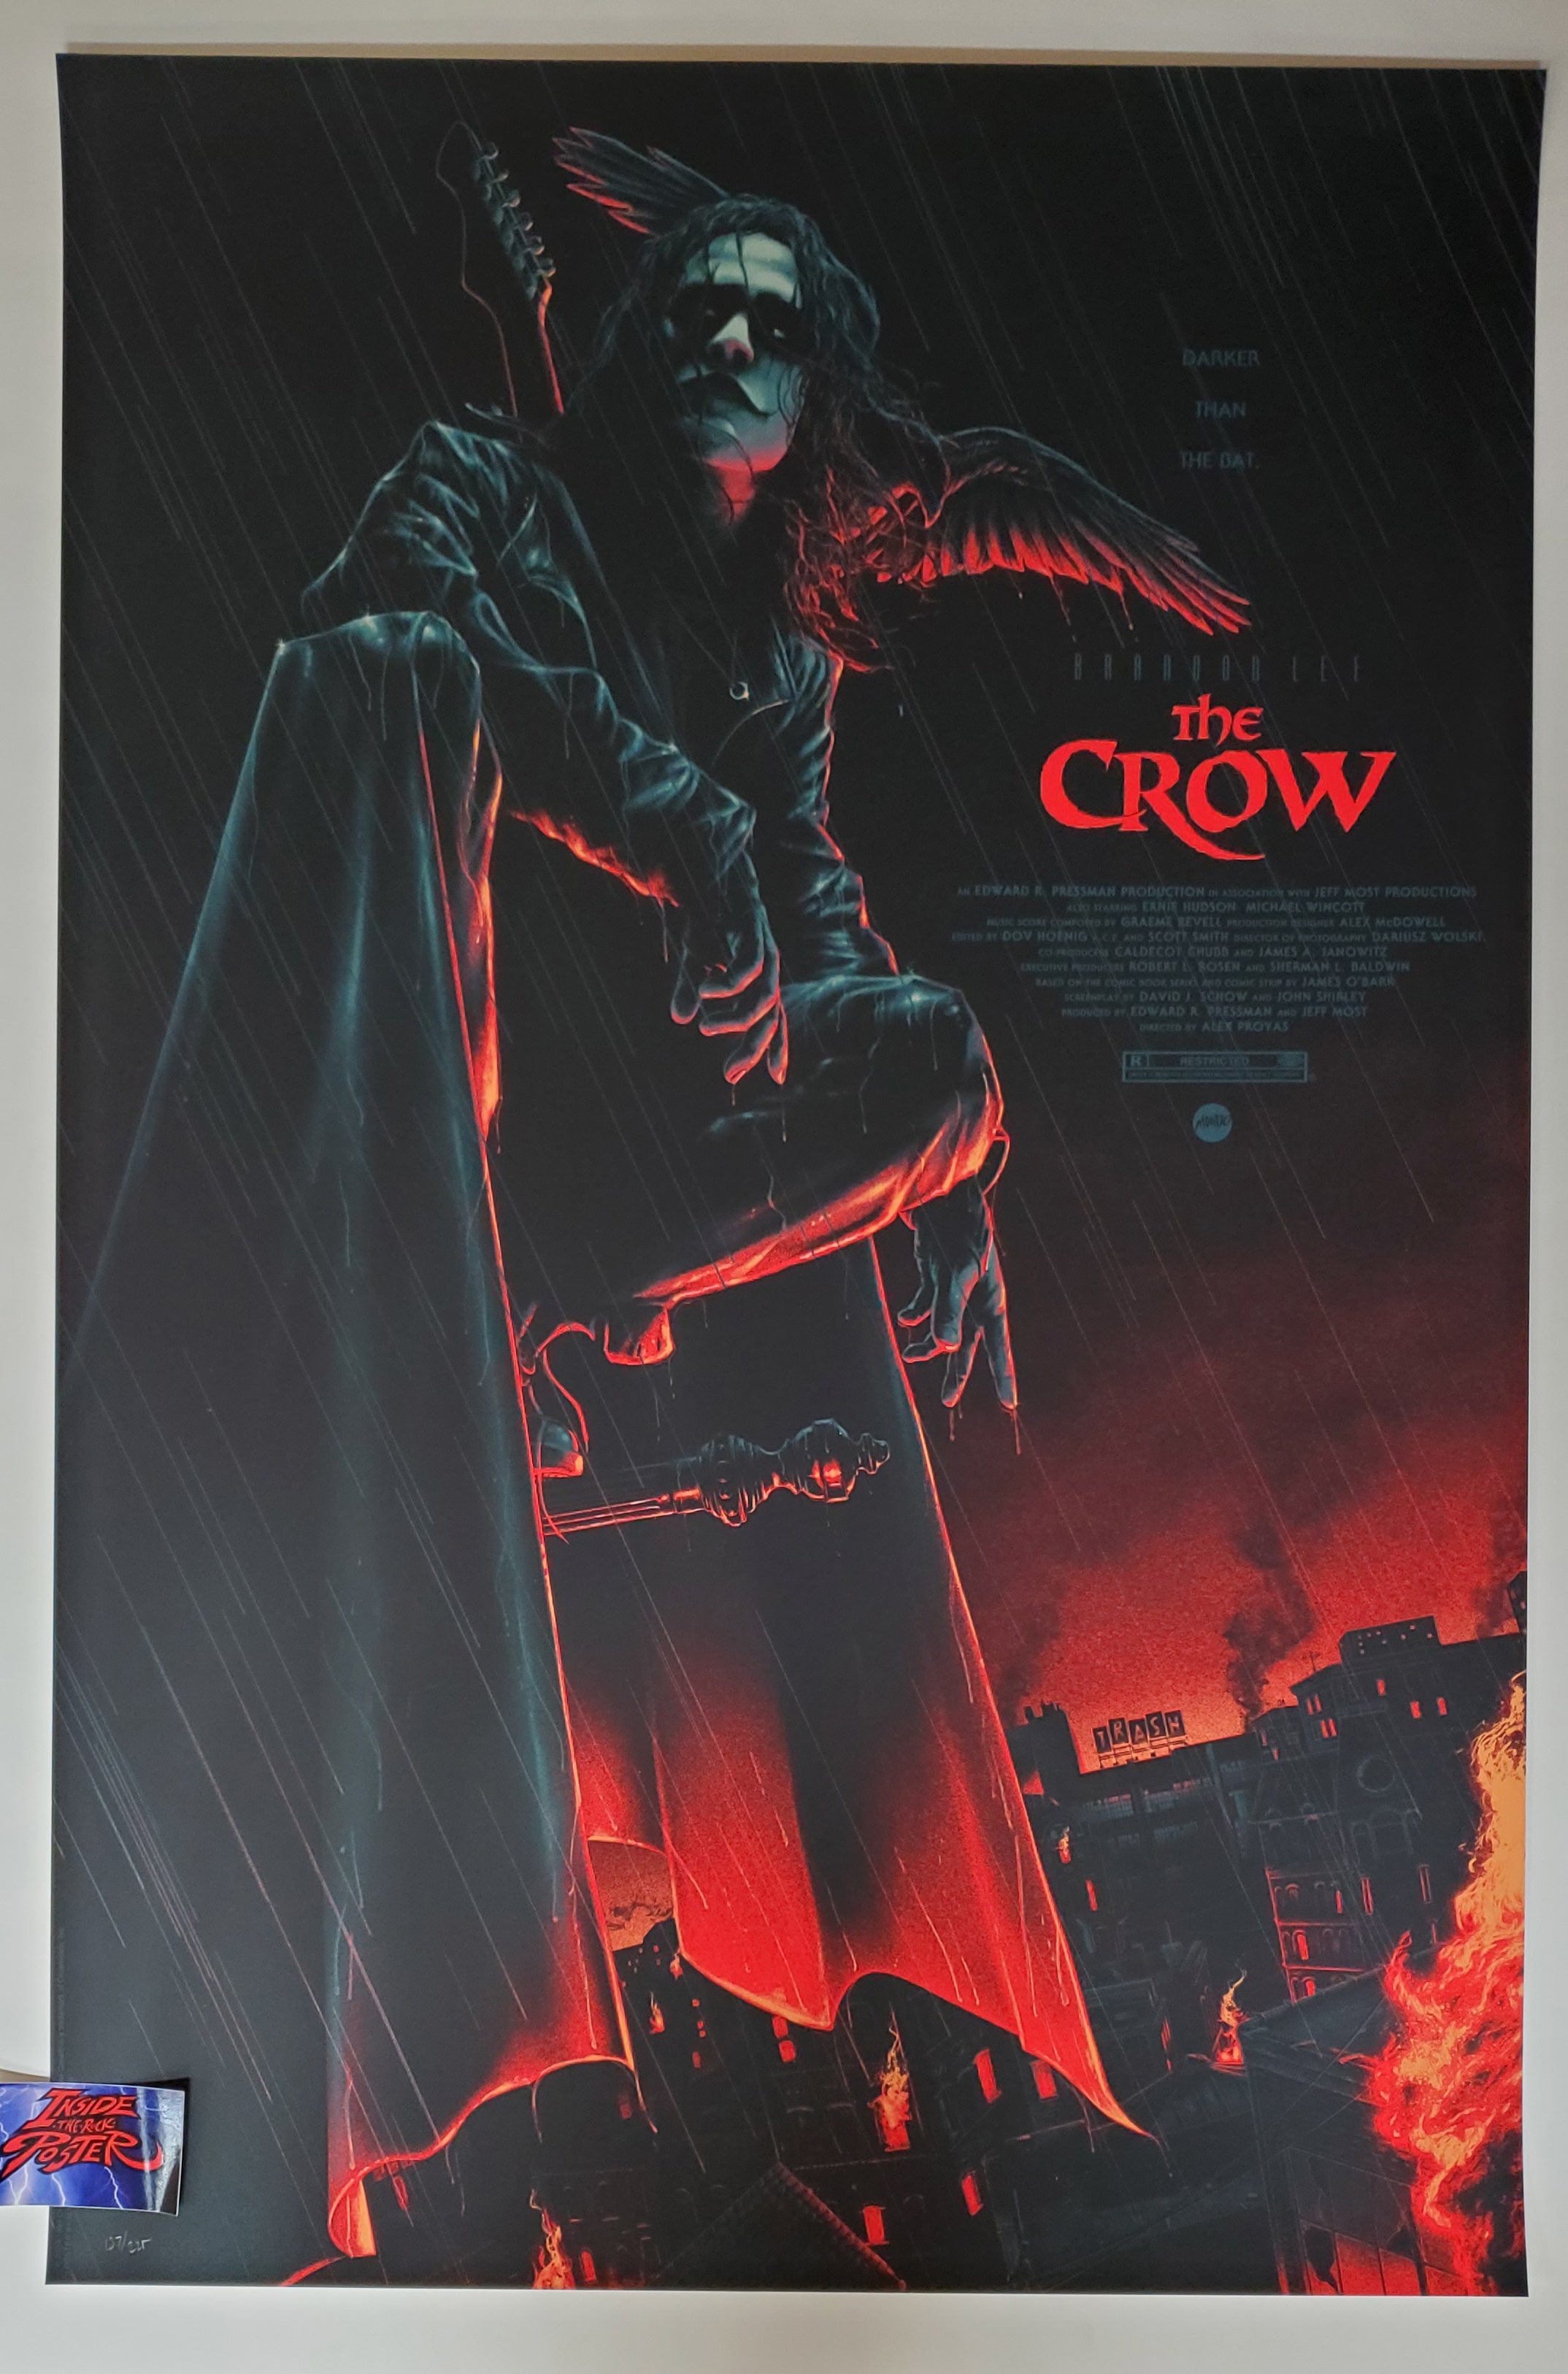 Matt Ryan Tobin The Crow Movie Poster Mondo 2020 Inside the Poster